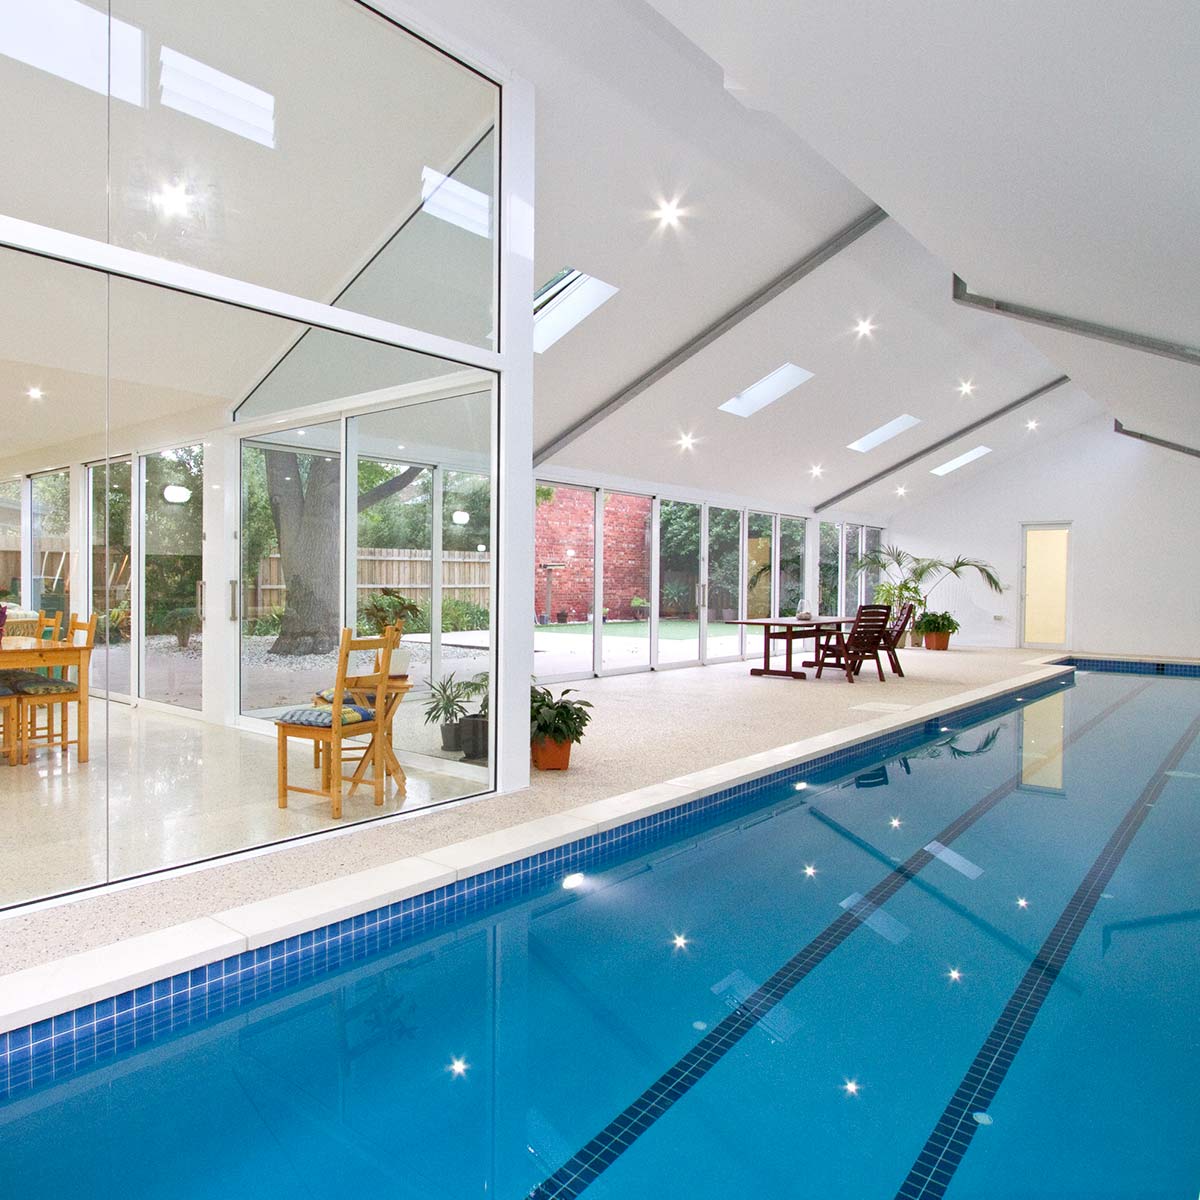 Personal Indoor Pools Melbourne, Australia